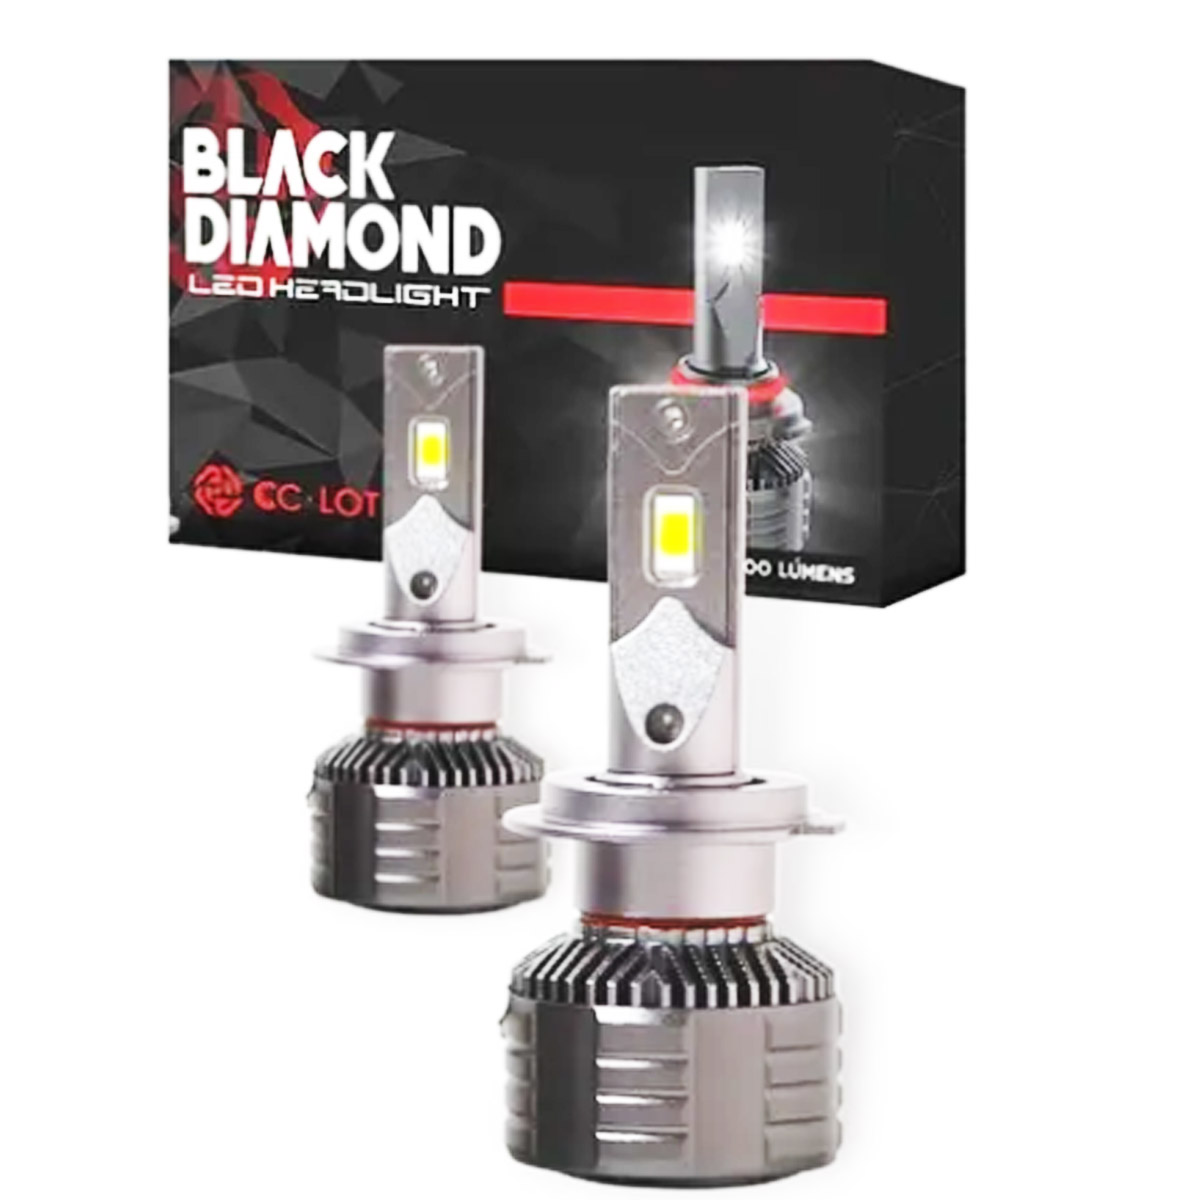 Par de Lâmpada Headlight Led CC-LOT Black Diamond HB3 9000 Lúmens JR8
